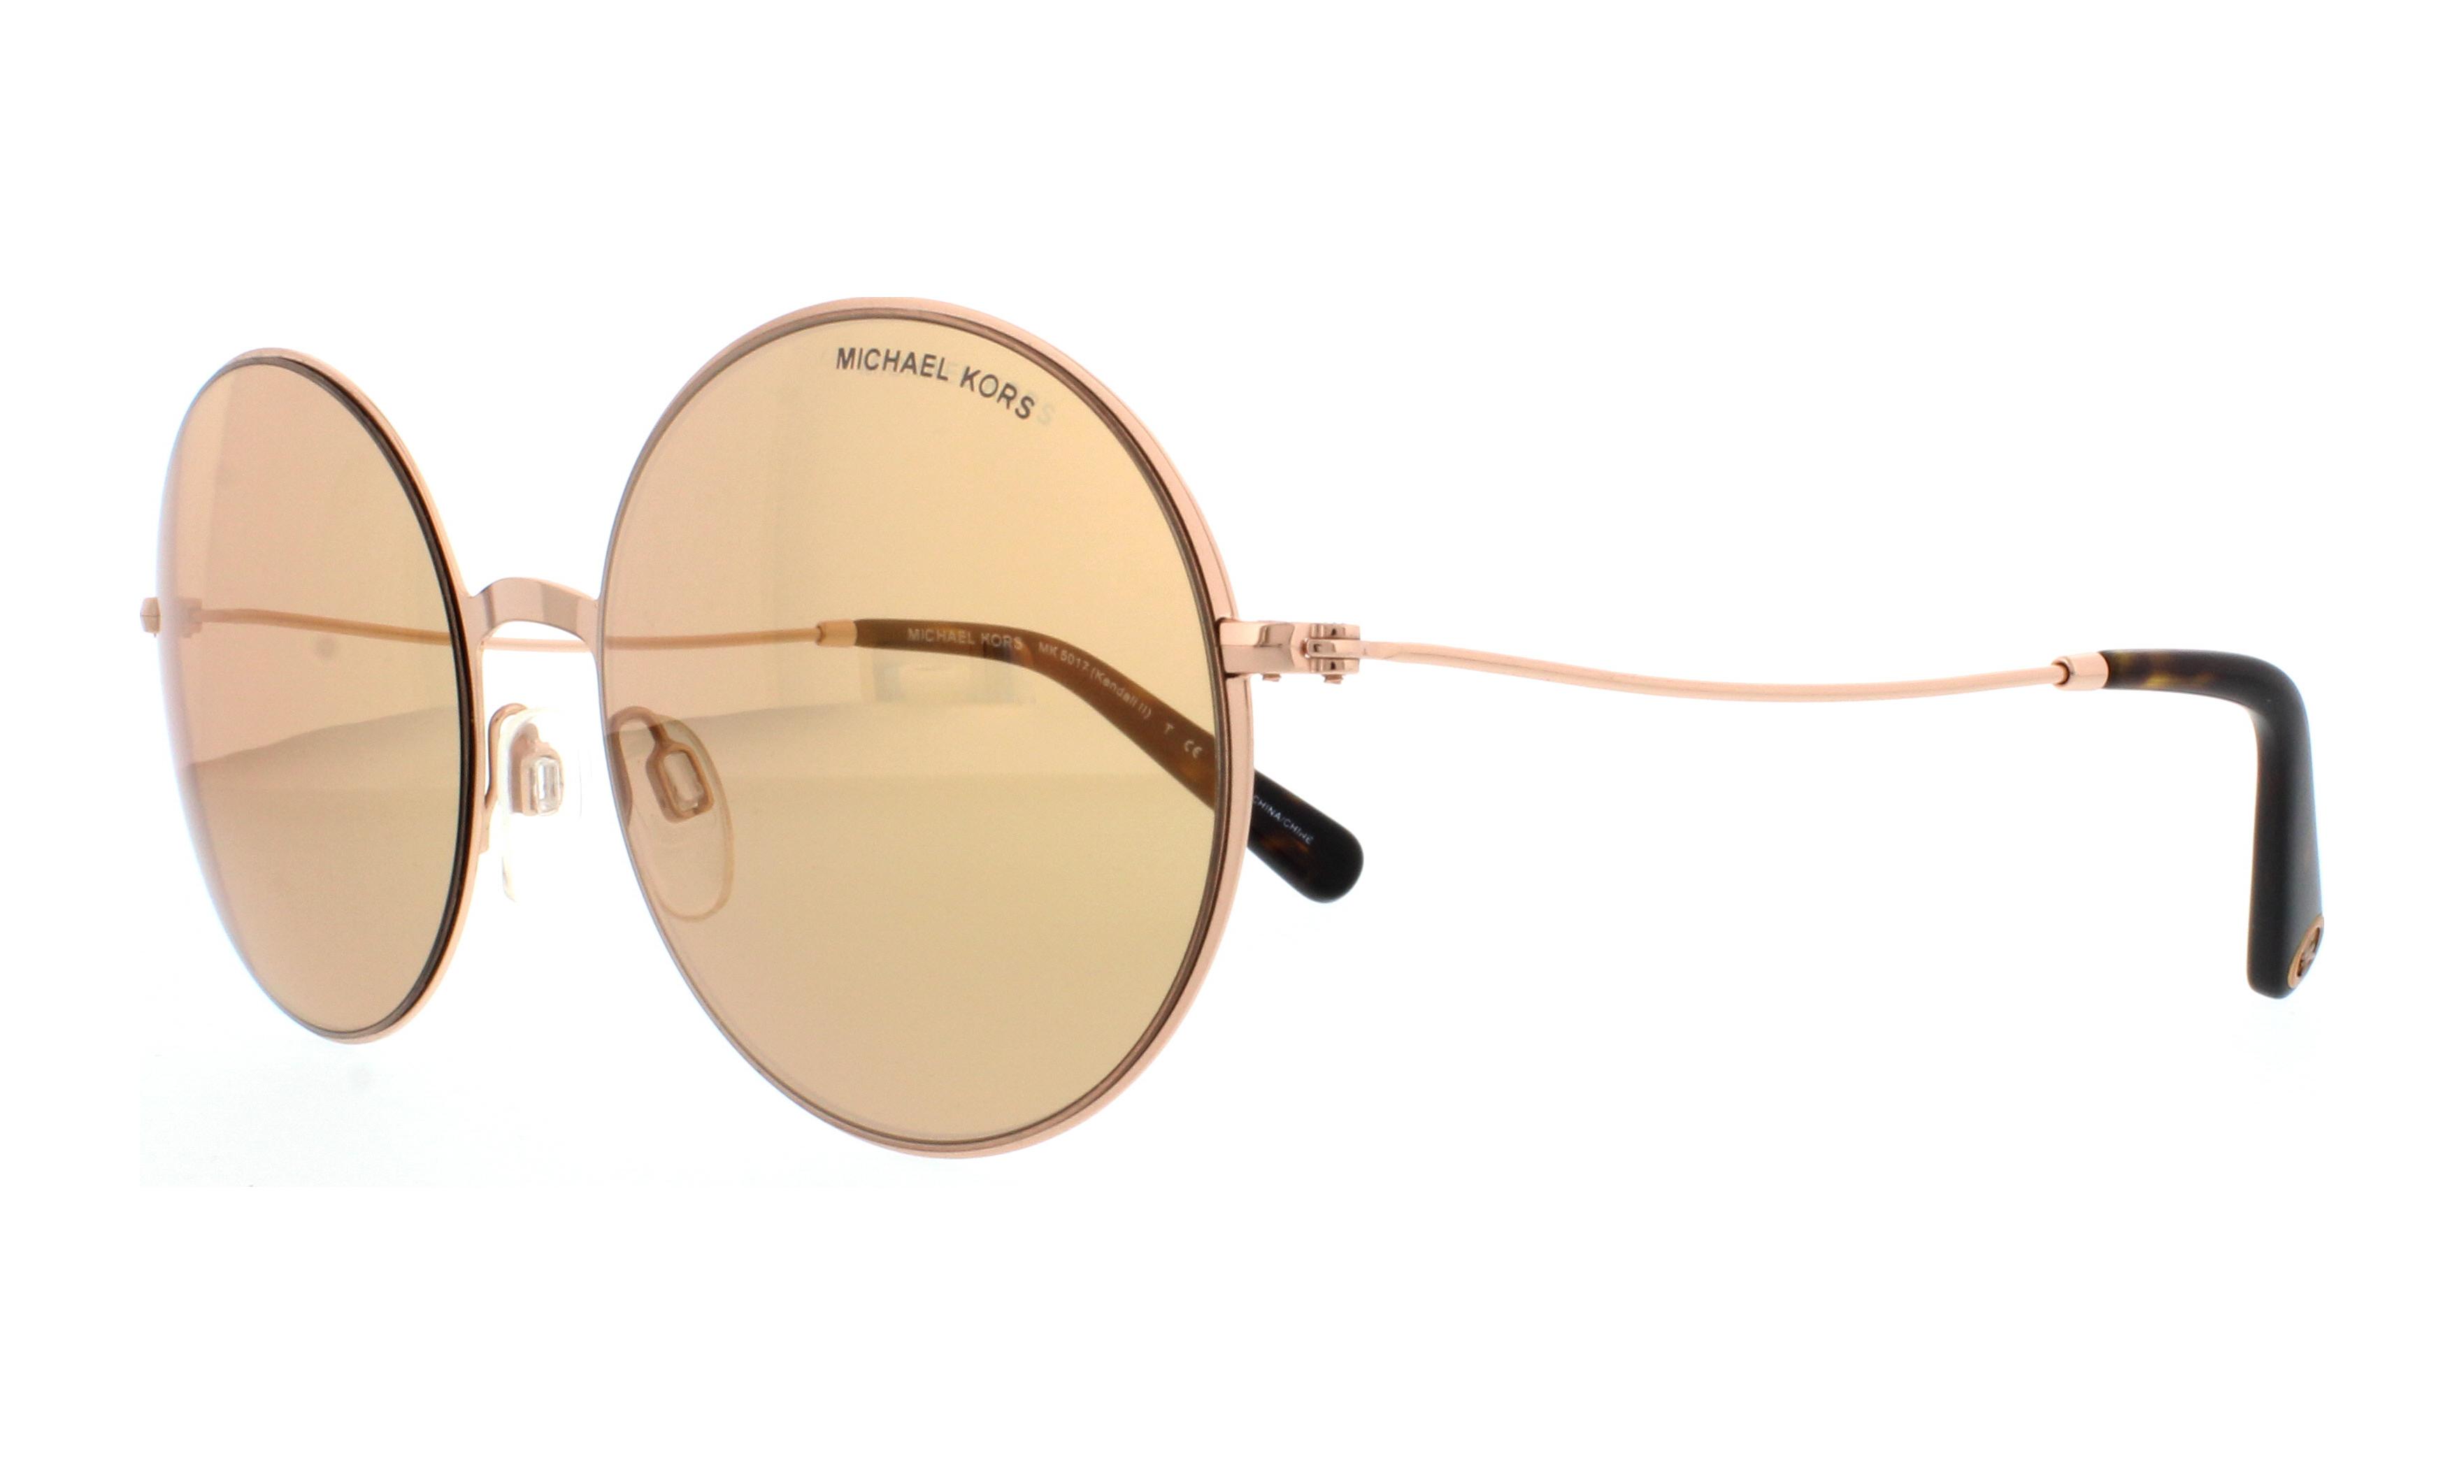 Designer Frames Outlet. Michael Kors Sunglasses MK5017 Kendall II